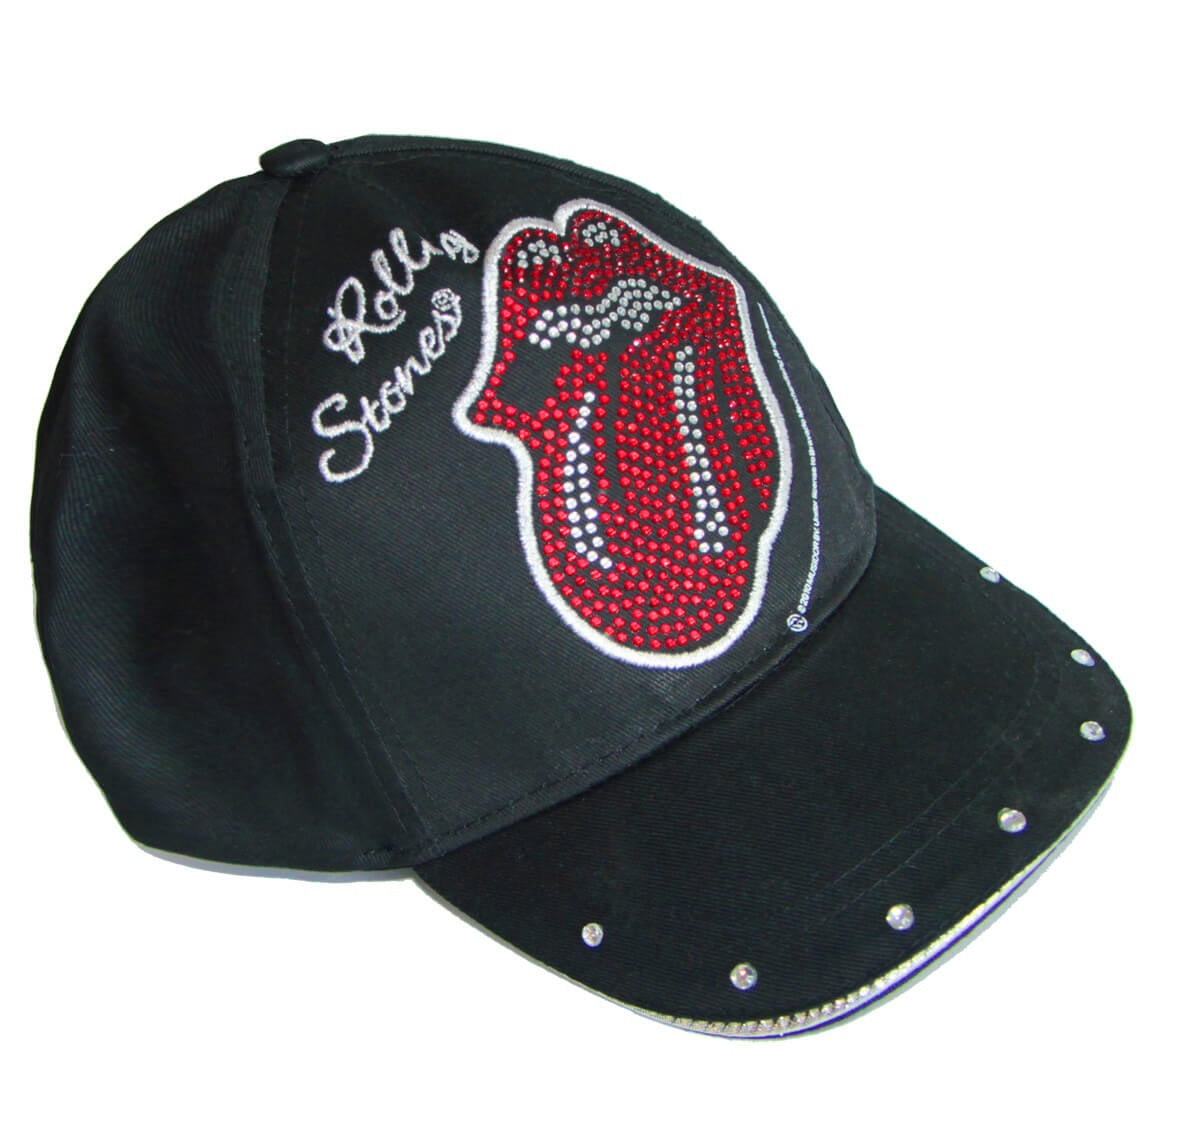 Rolling Stones Baseball Cap Peaked Cap